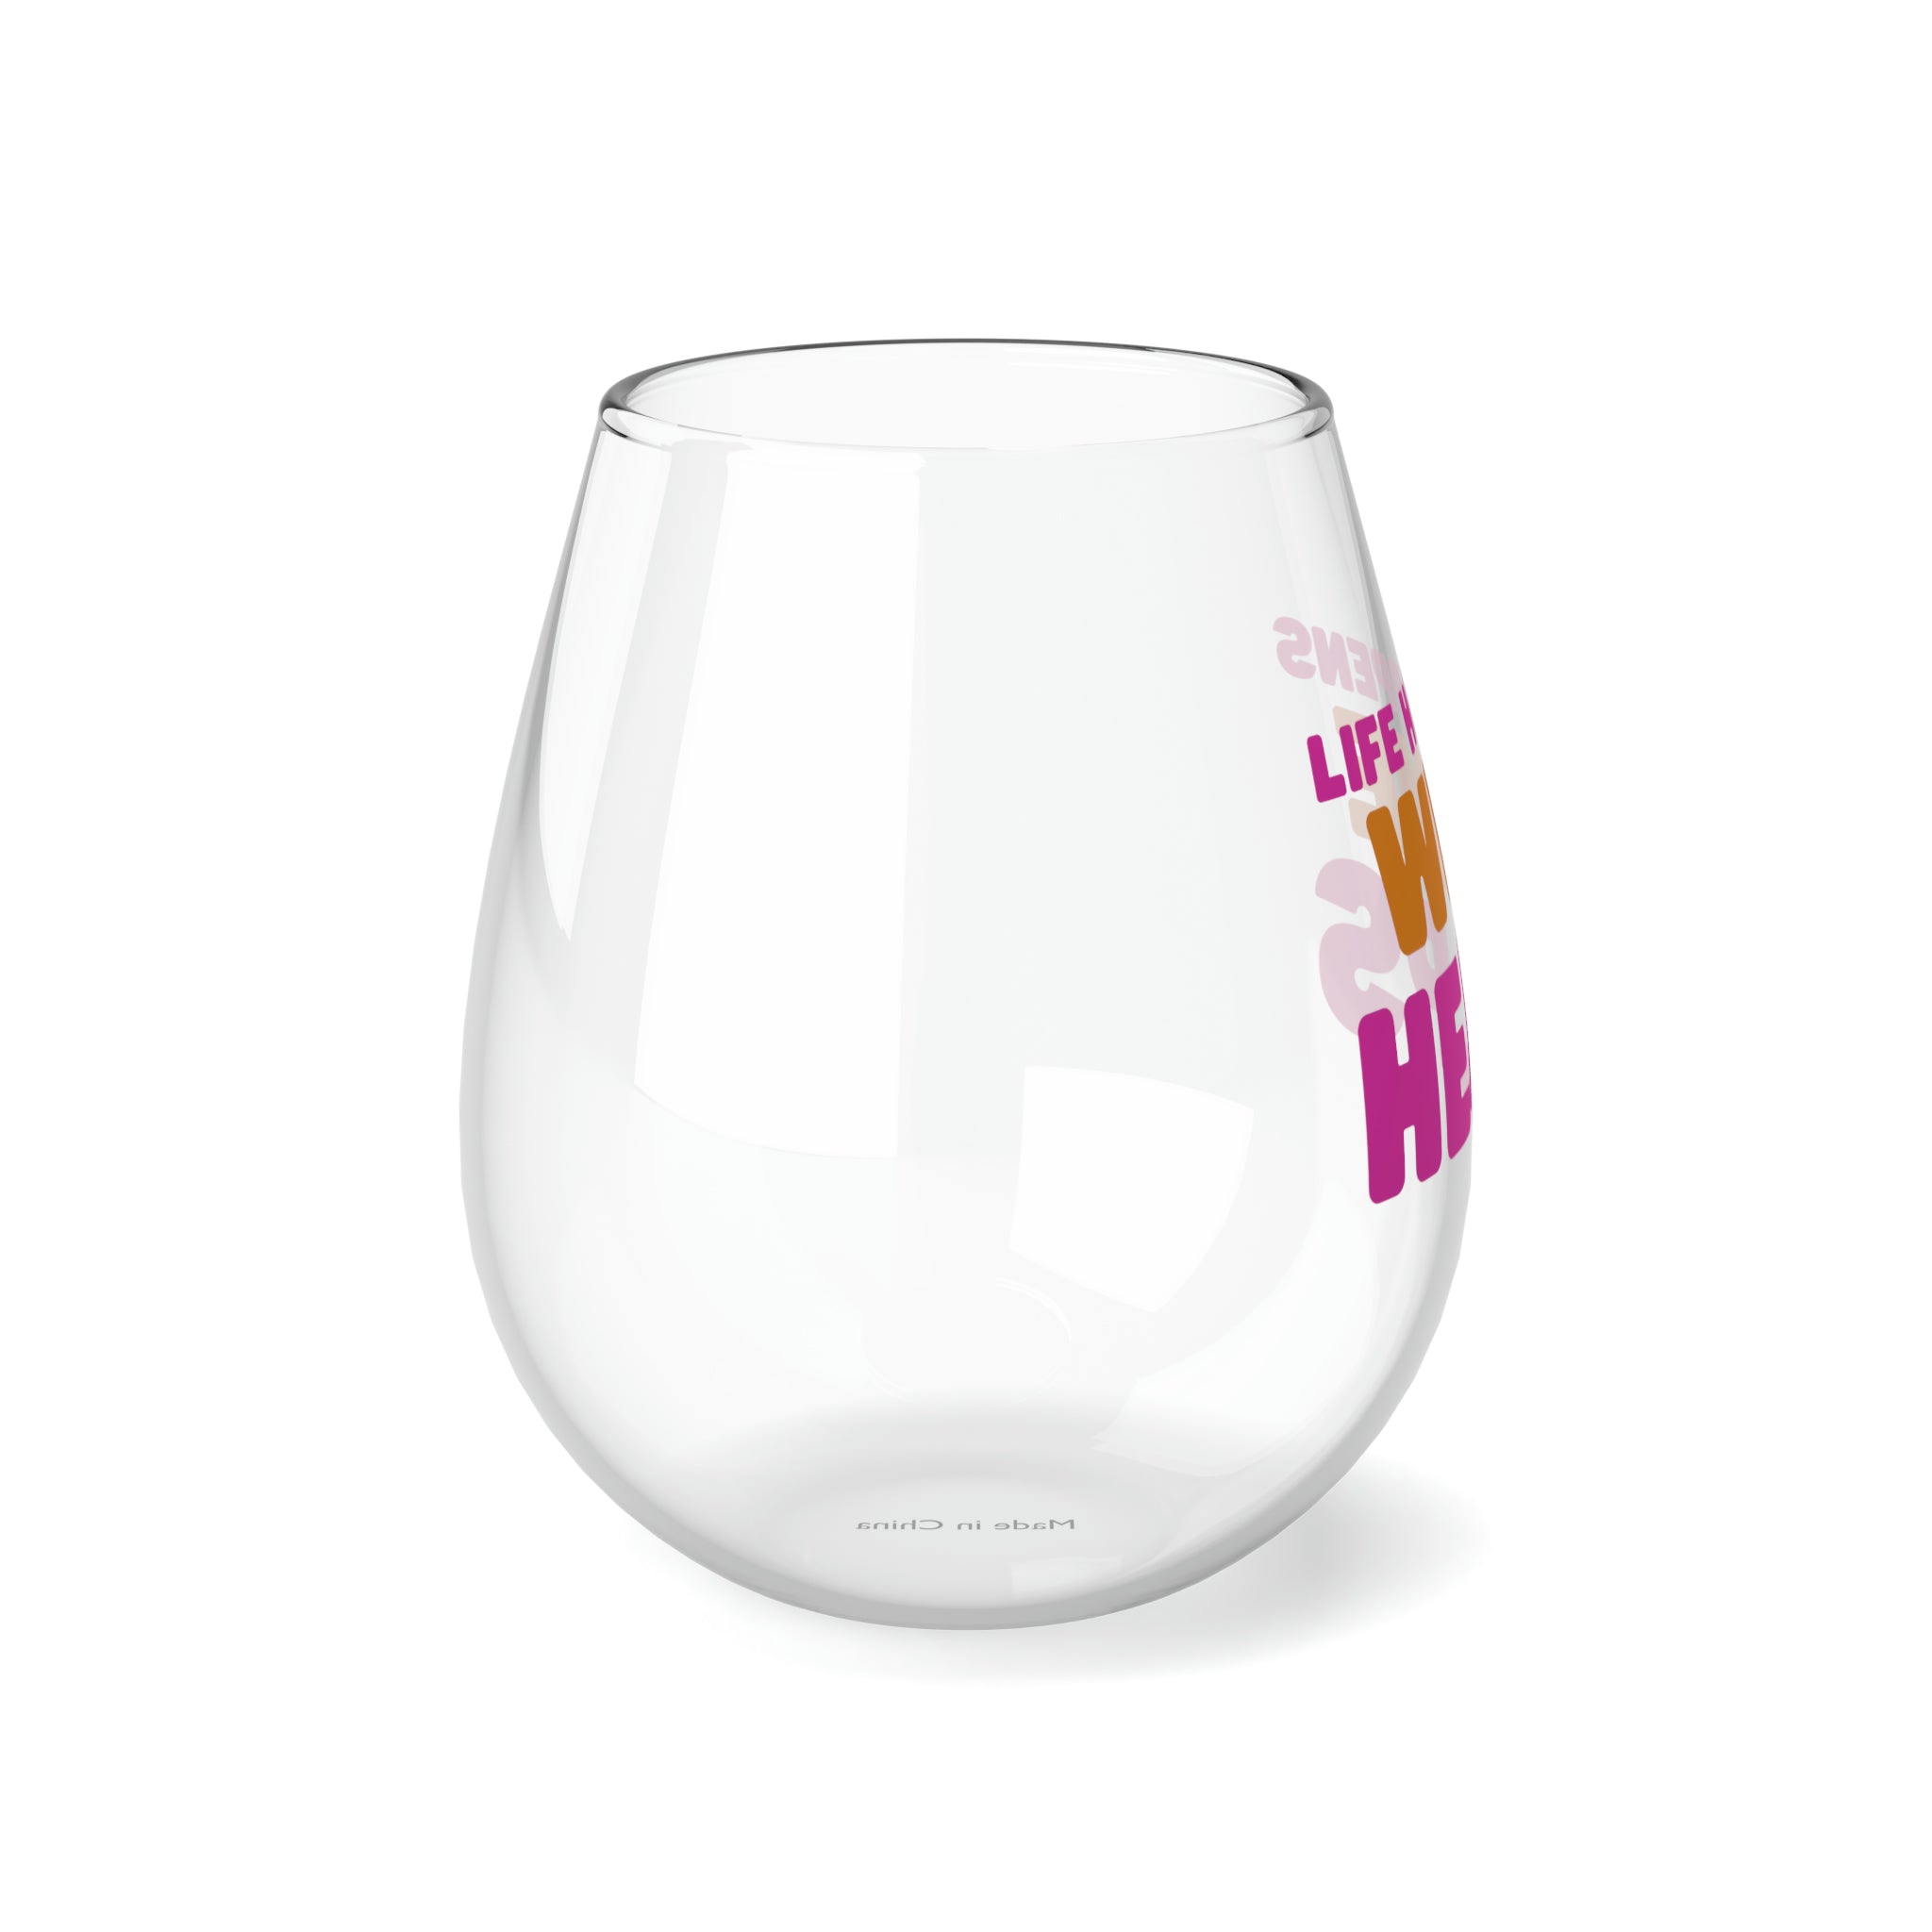 Life Happens, Wine Helps - Stemless Wine Glass, 11.75oz